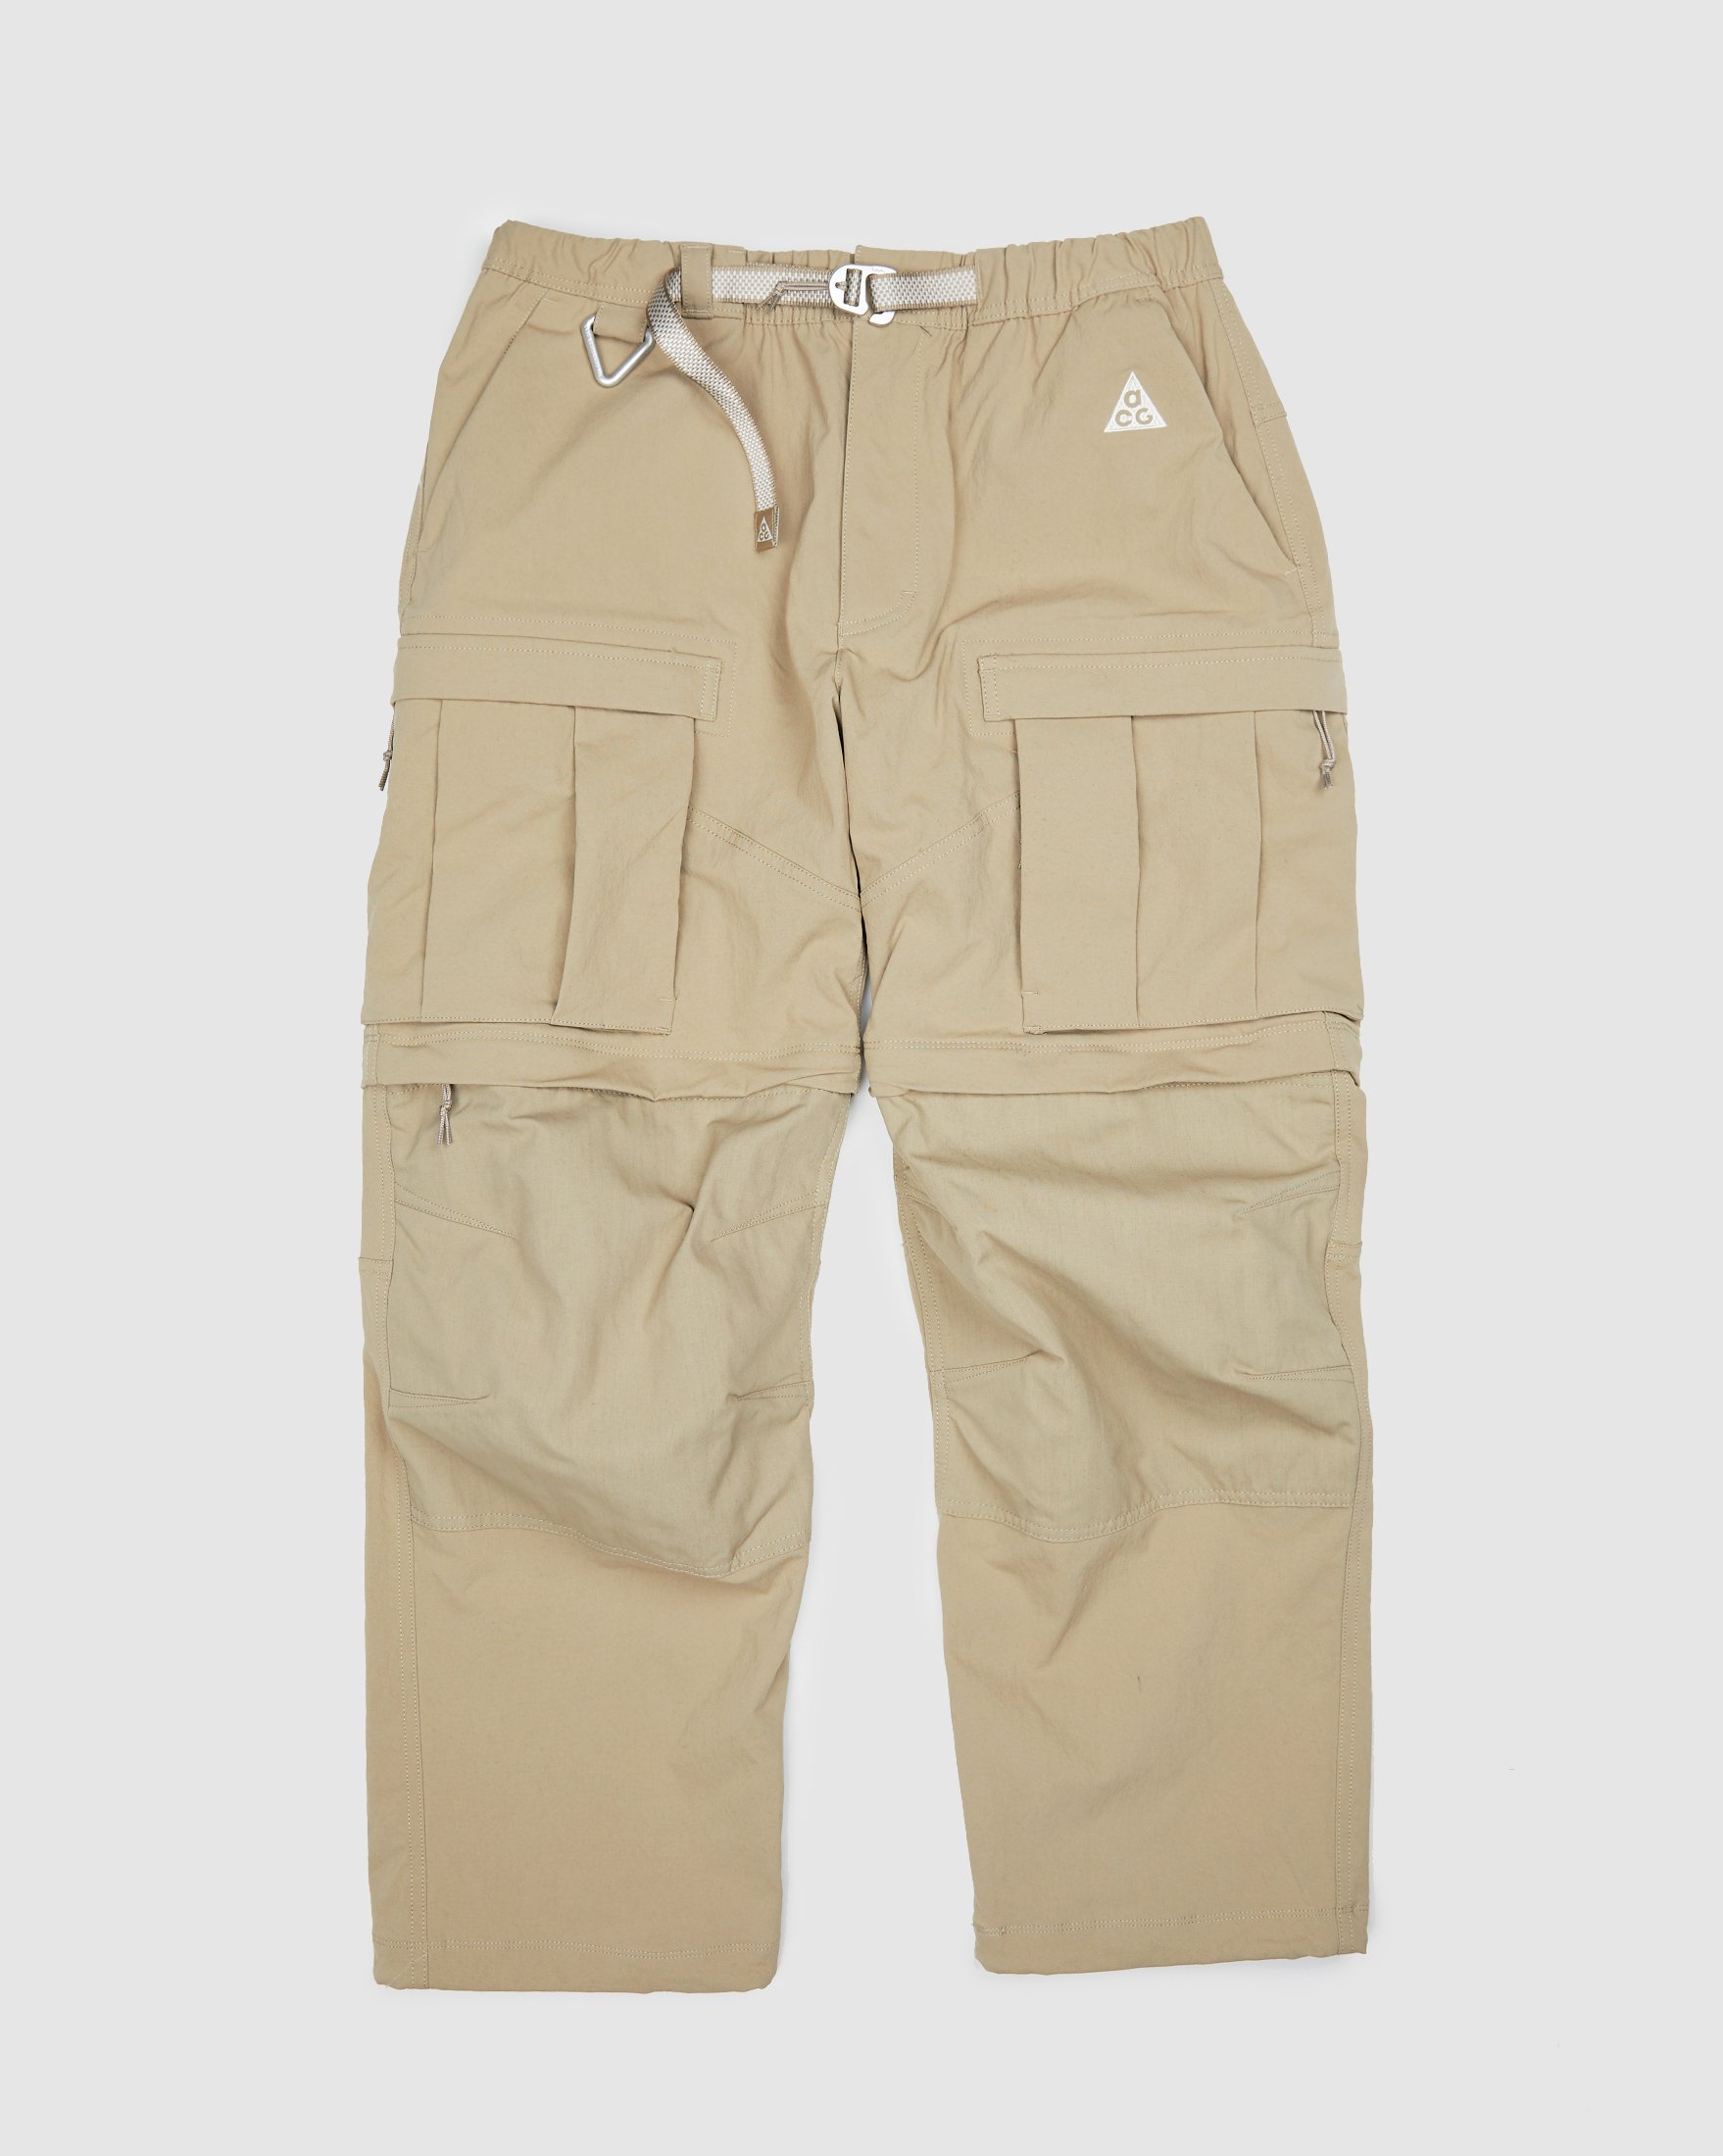 nike pants with side pockets